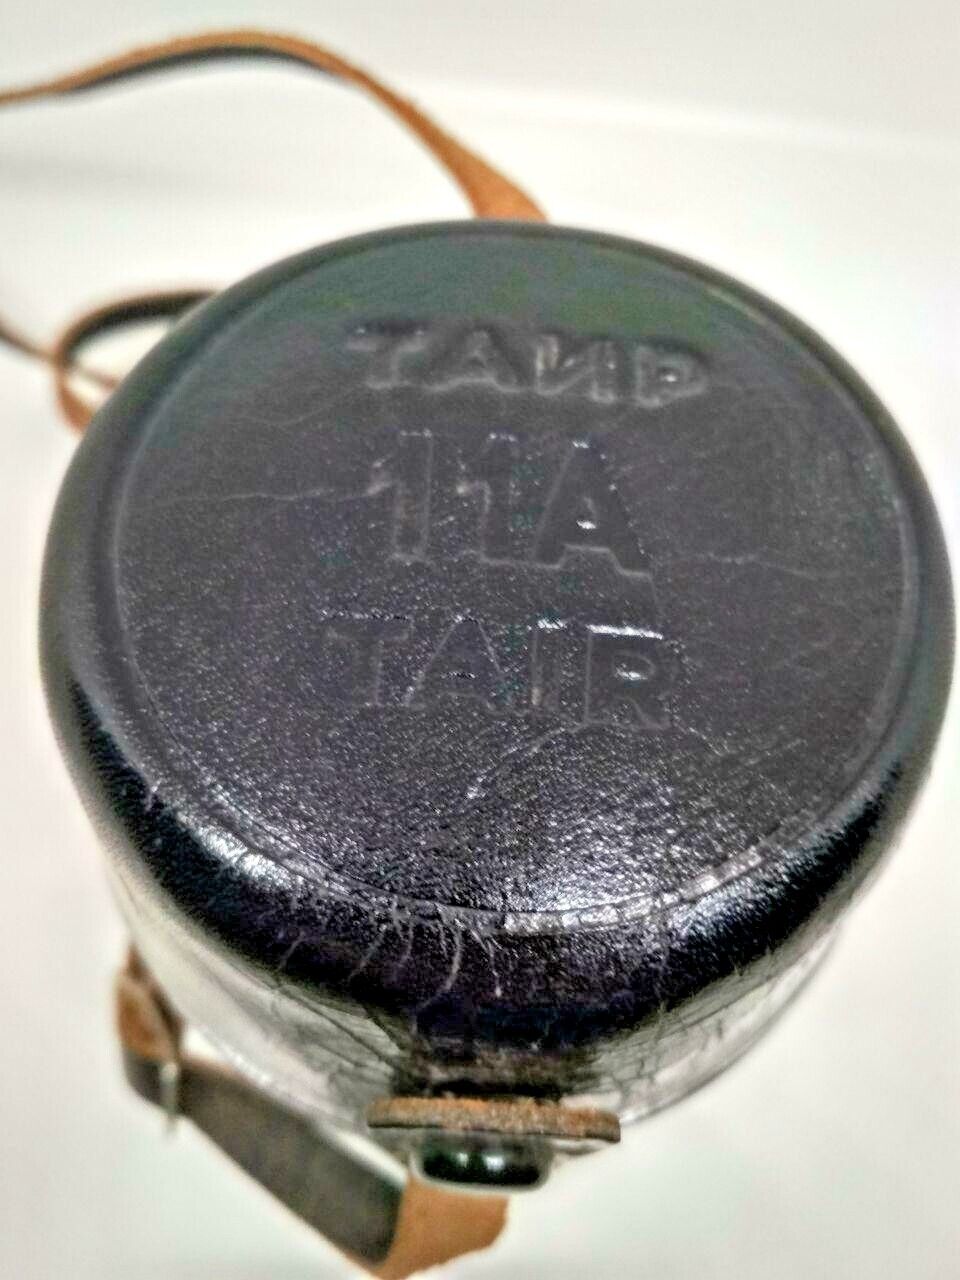 TAIR-11A Tair-11 Original Storage Box Leather Case Tube Lens Holder USSR